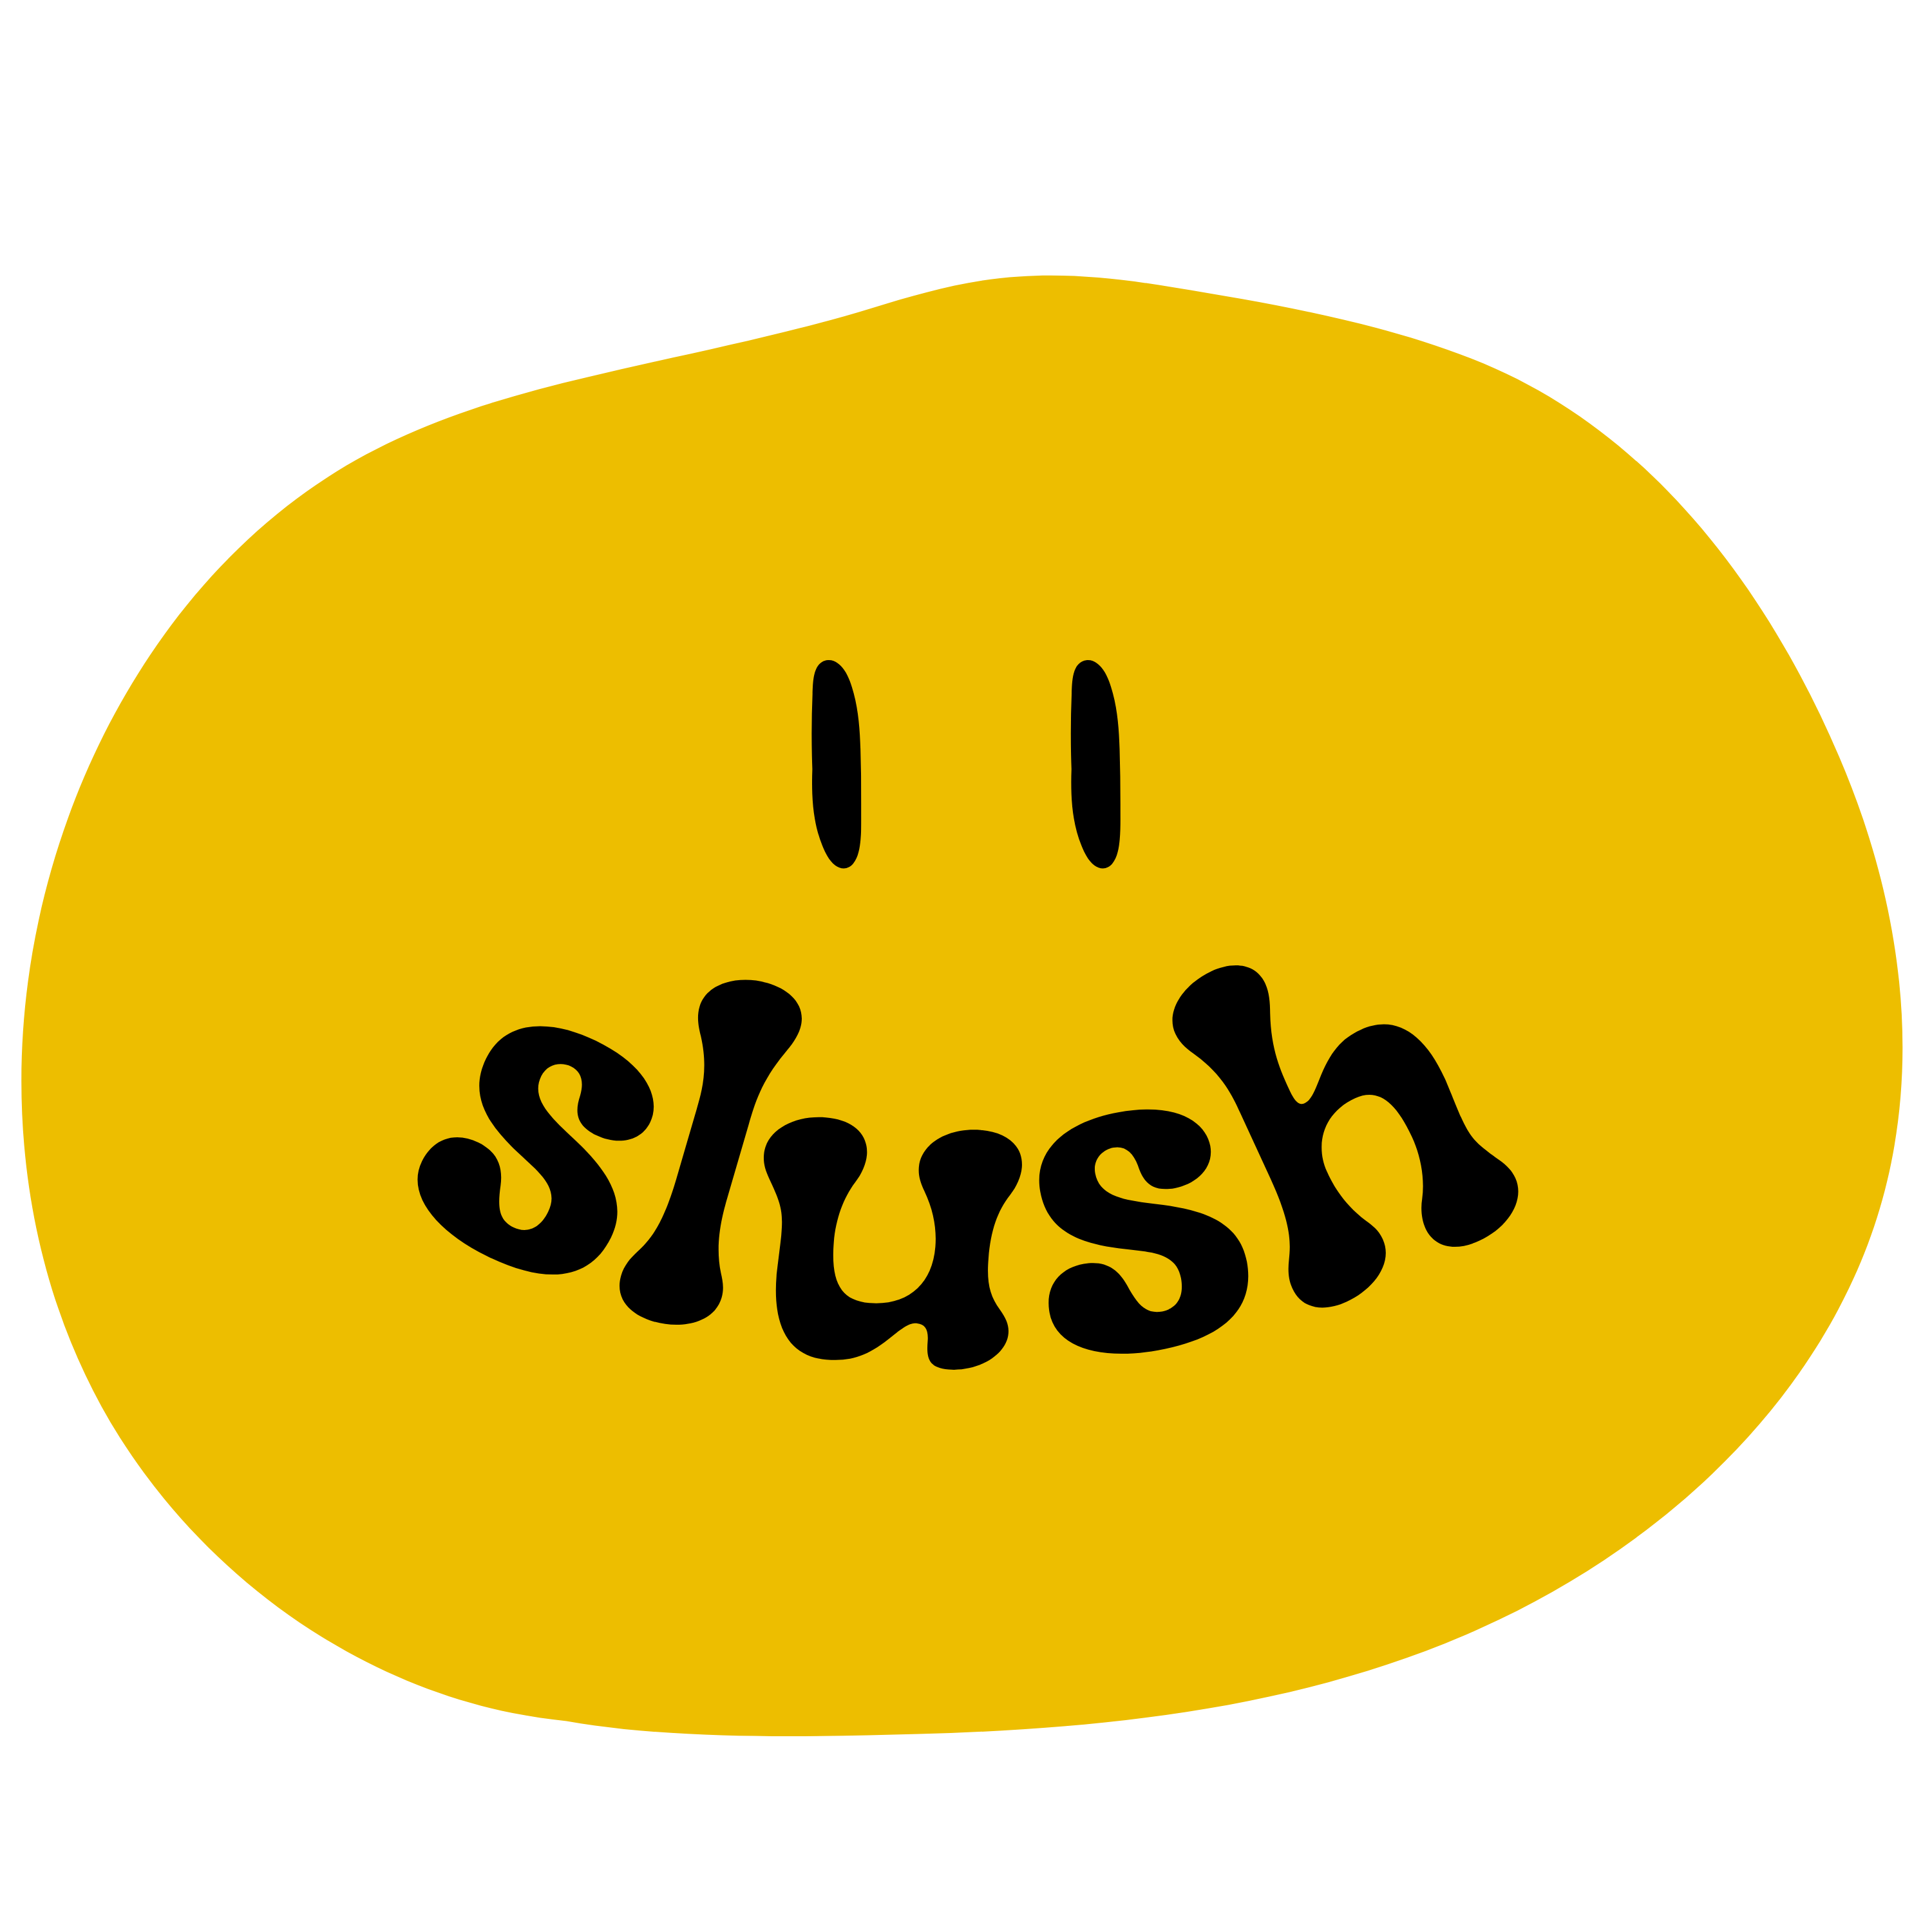 Slush